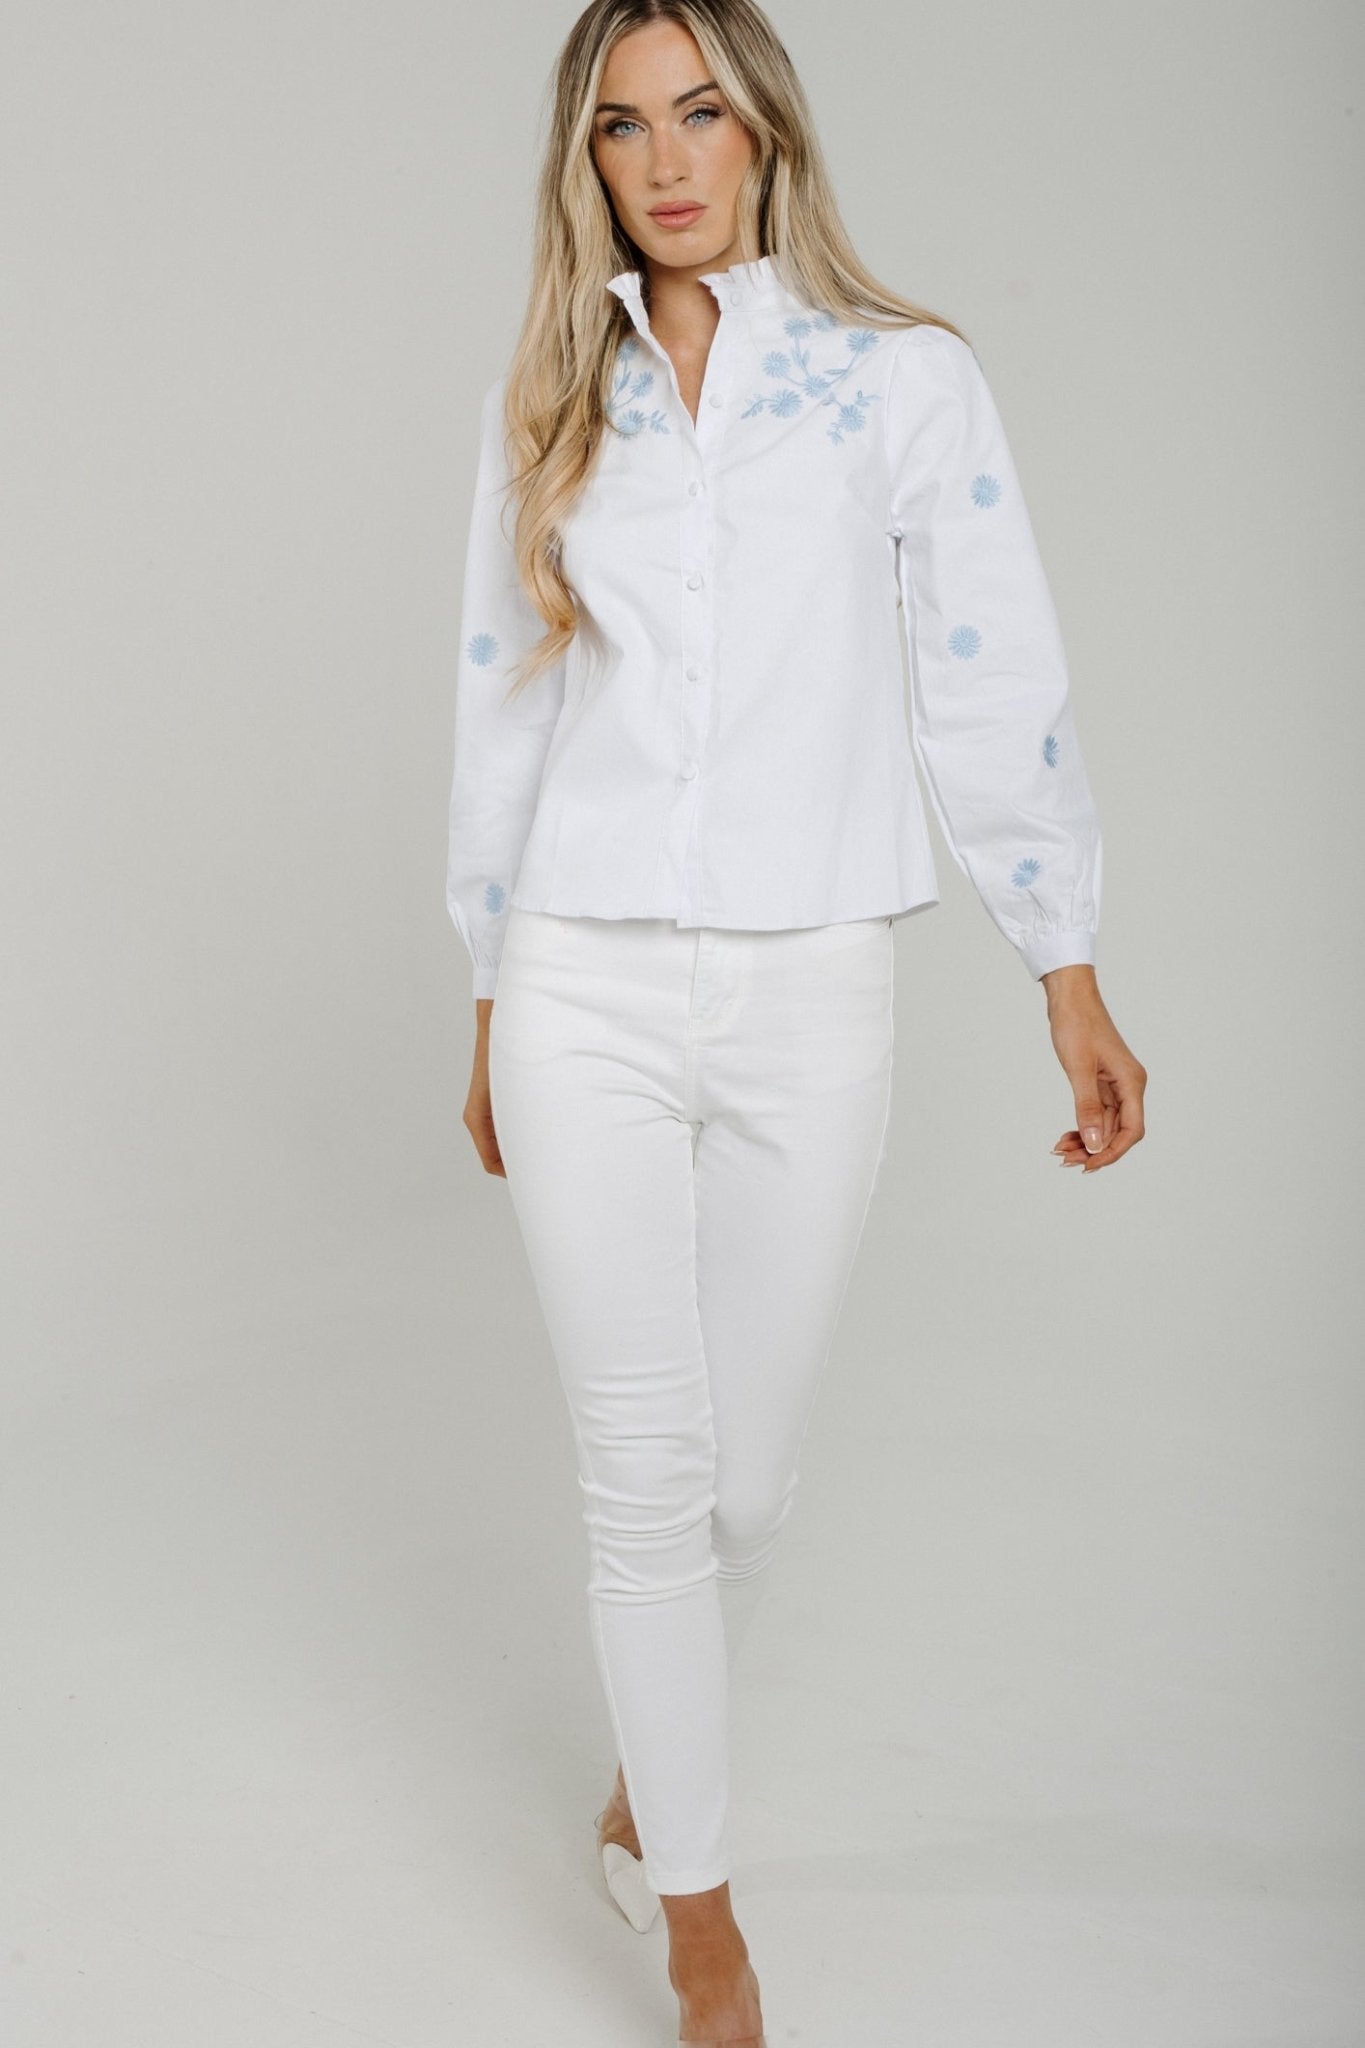 Sally Embroidered Denim Top In White - The Walk in Wardrobe